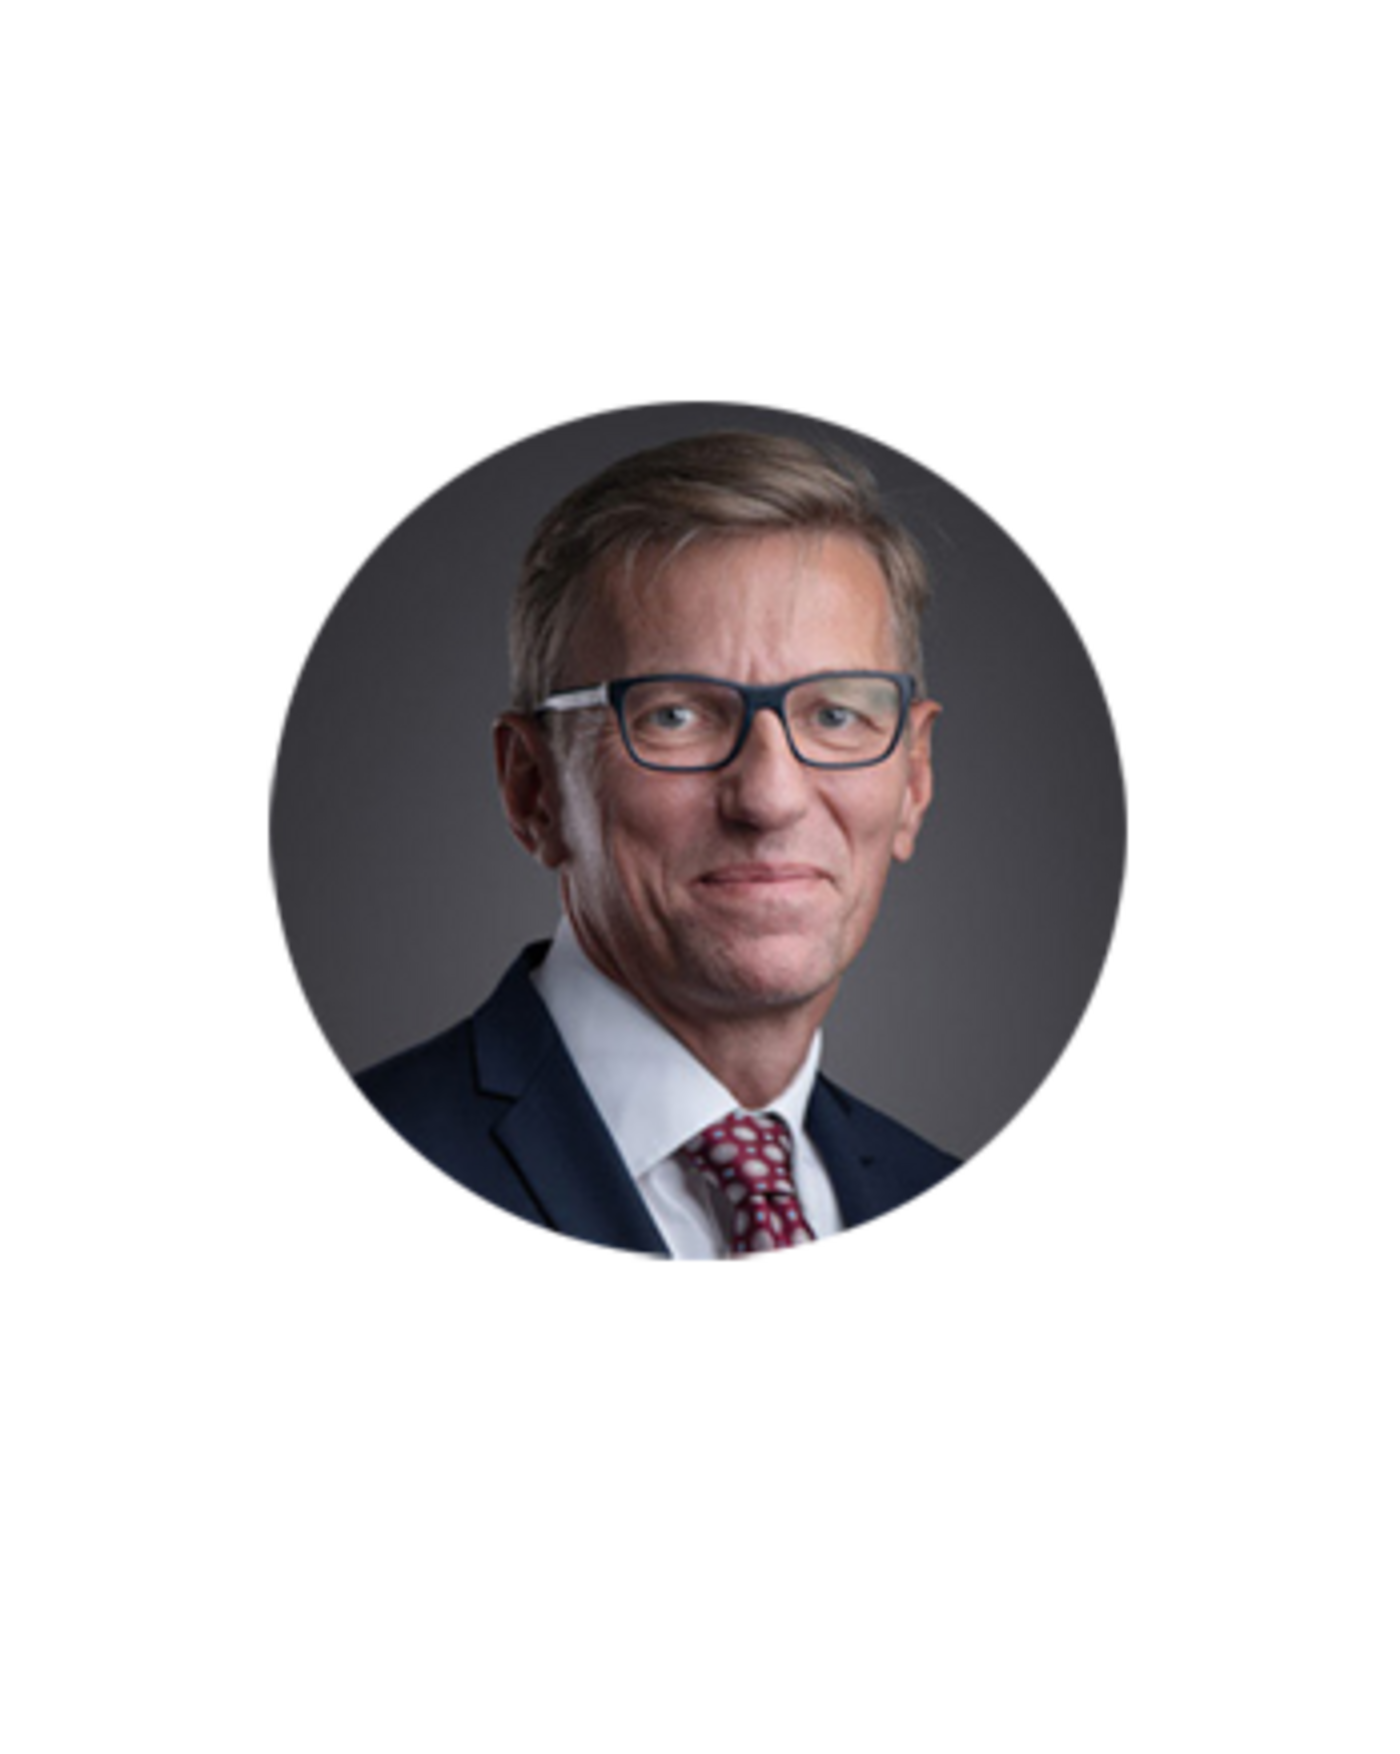 Johnny Thomsen, CEO, MHI Vestas